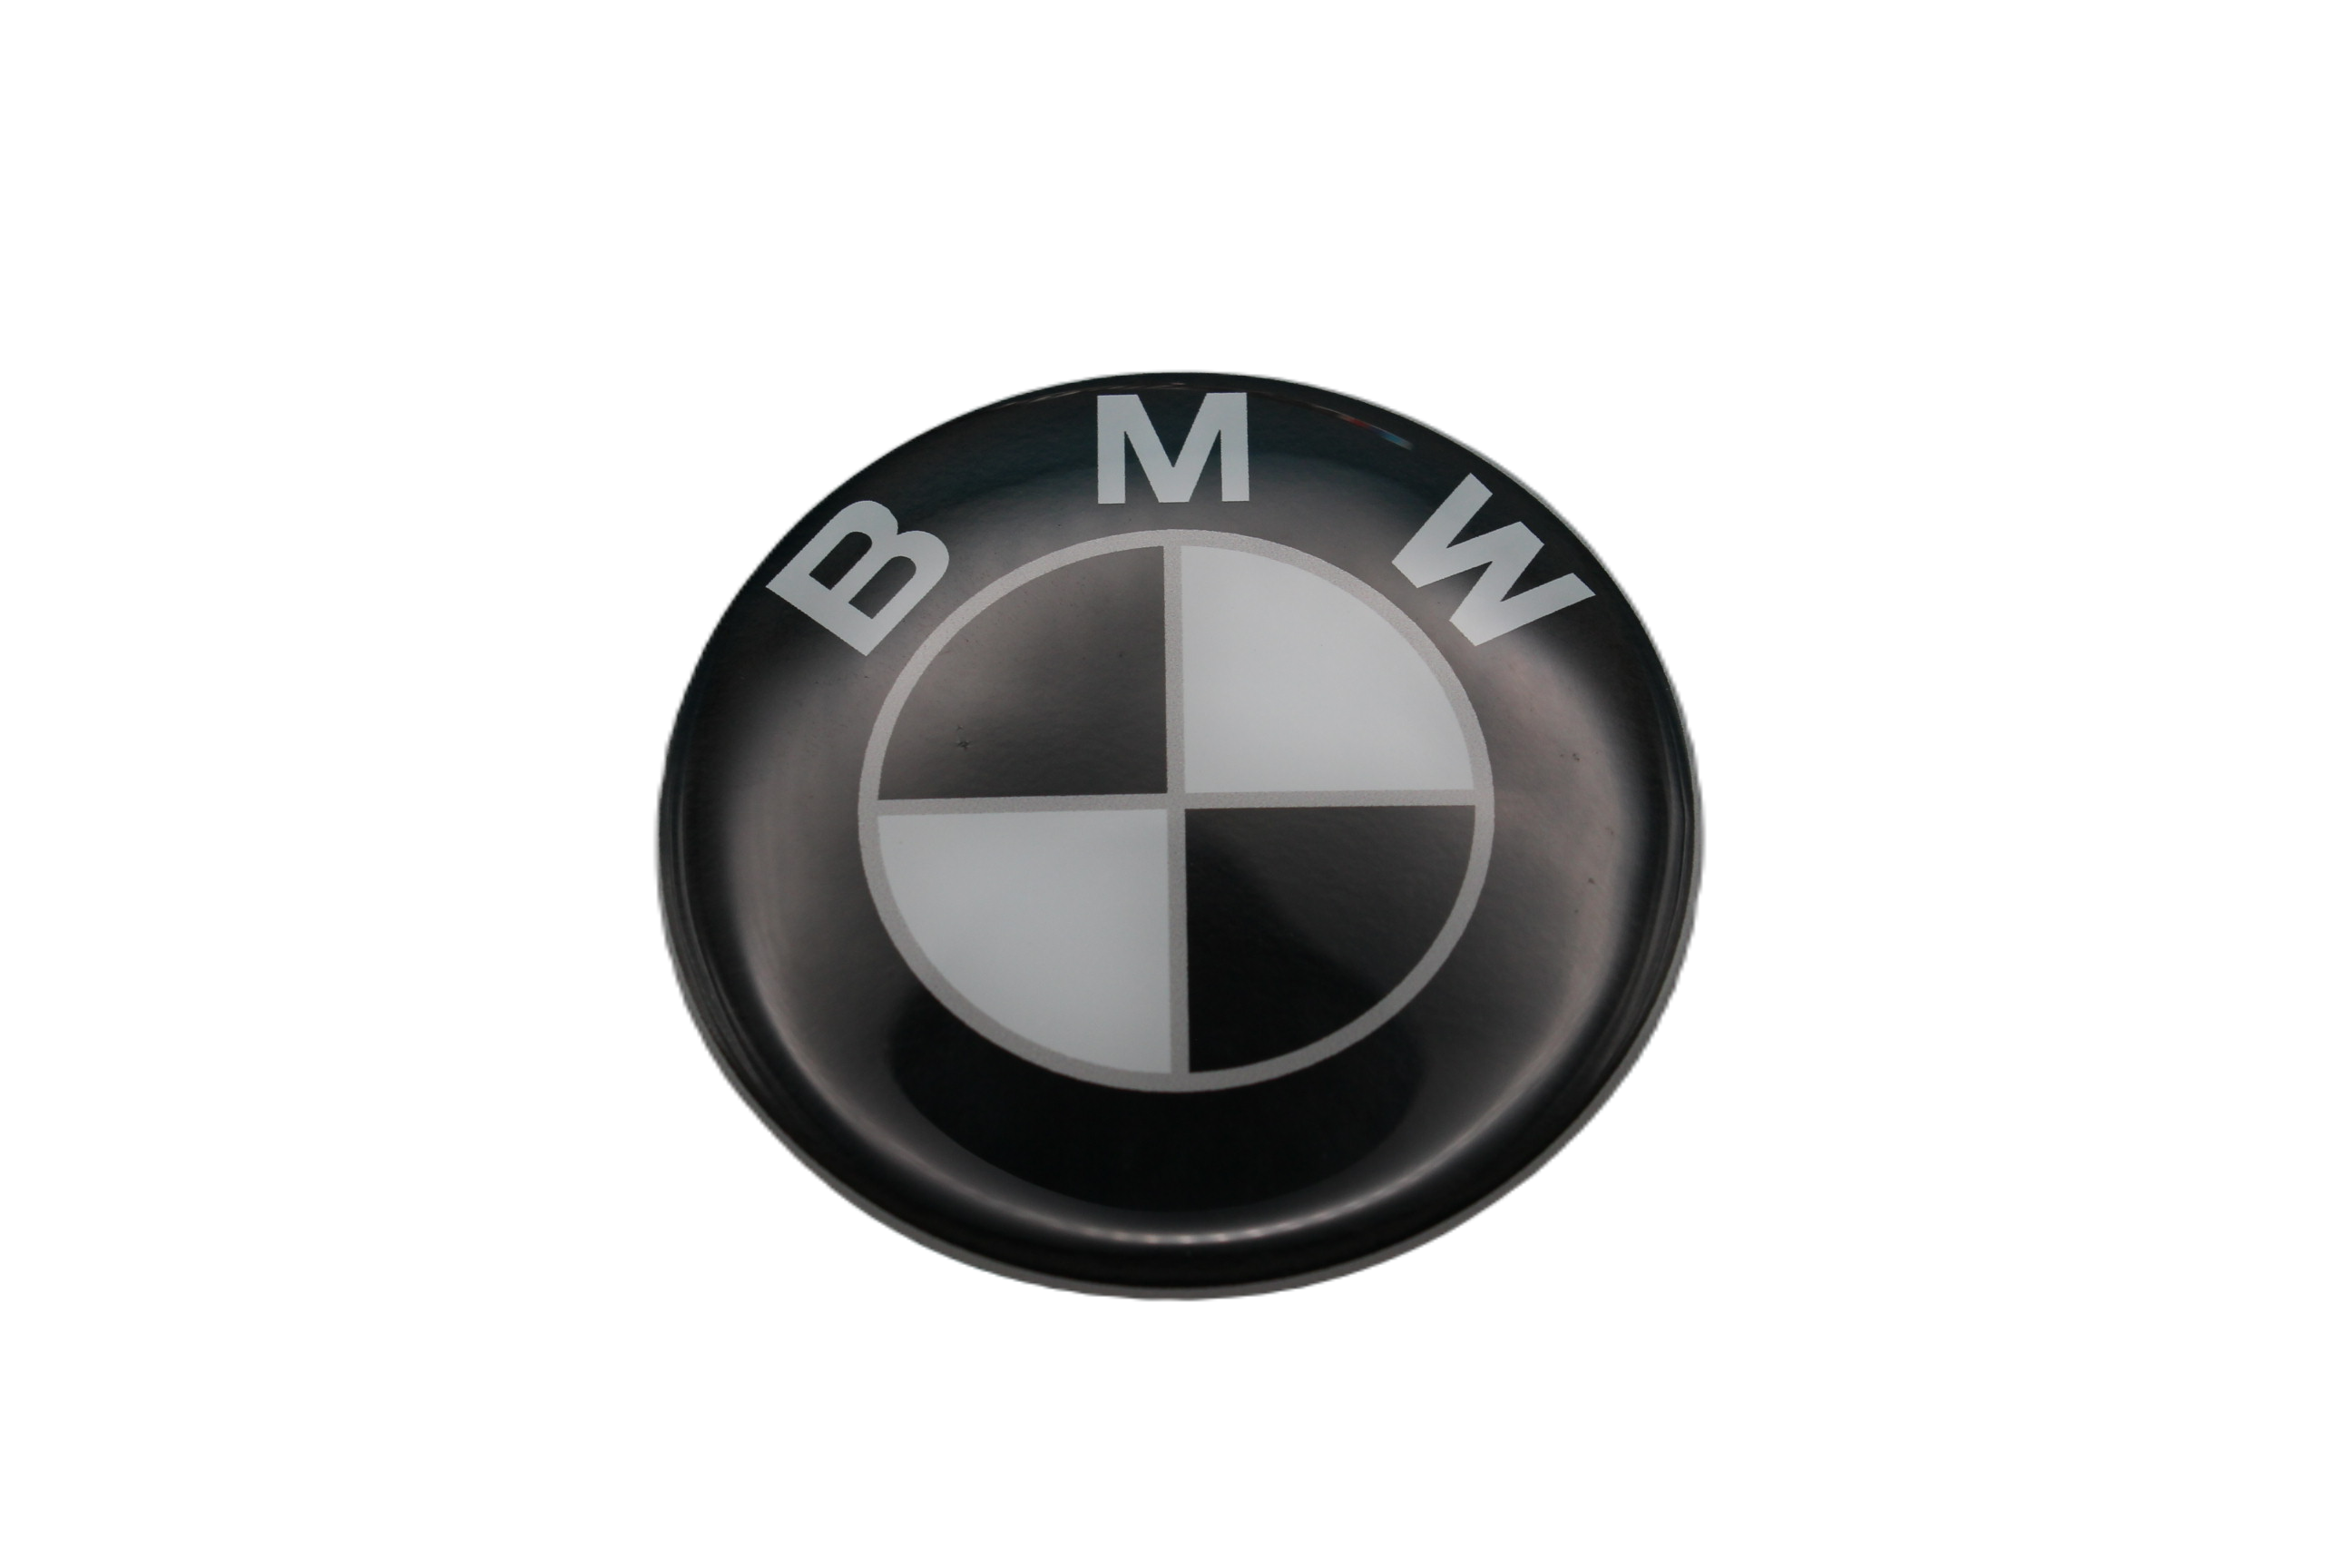 BMW Car Logo Emblem PNG  Emblem logo, Car logos, Power logo